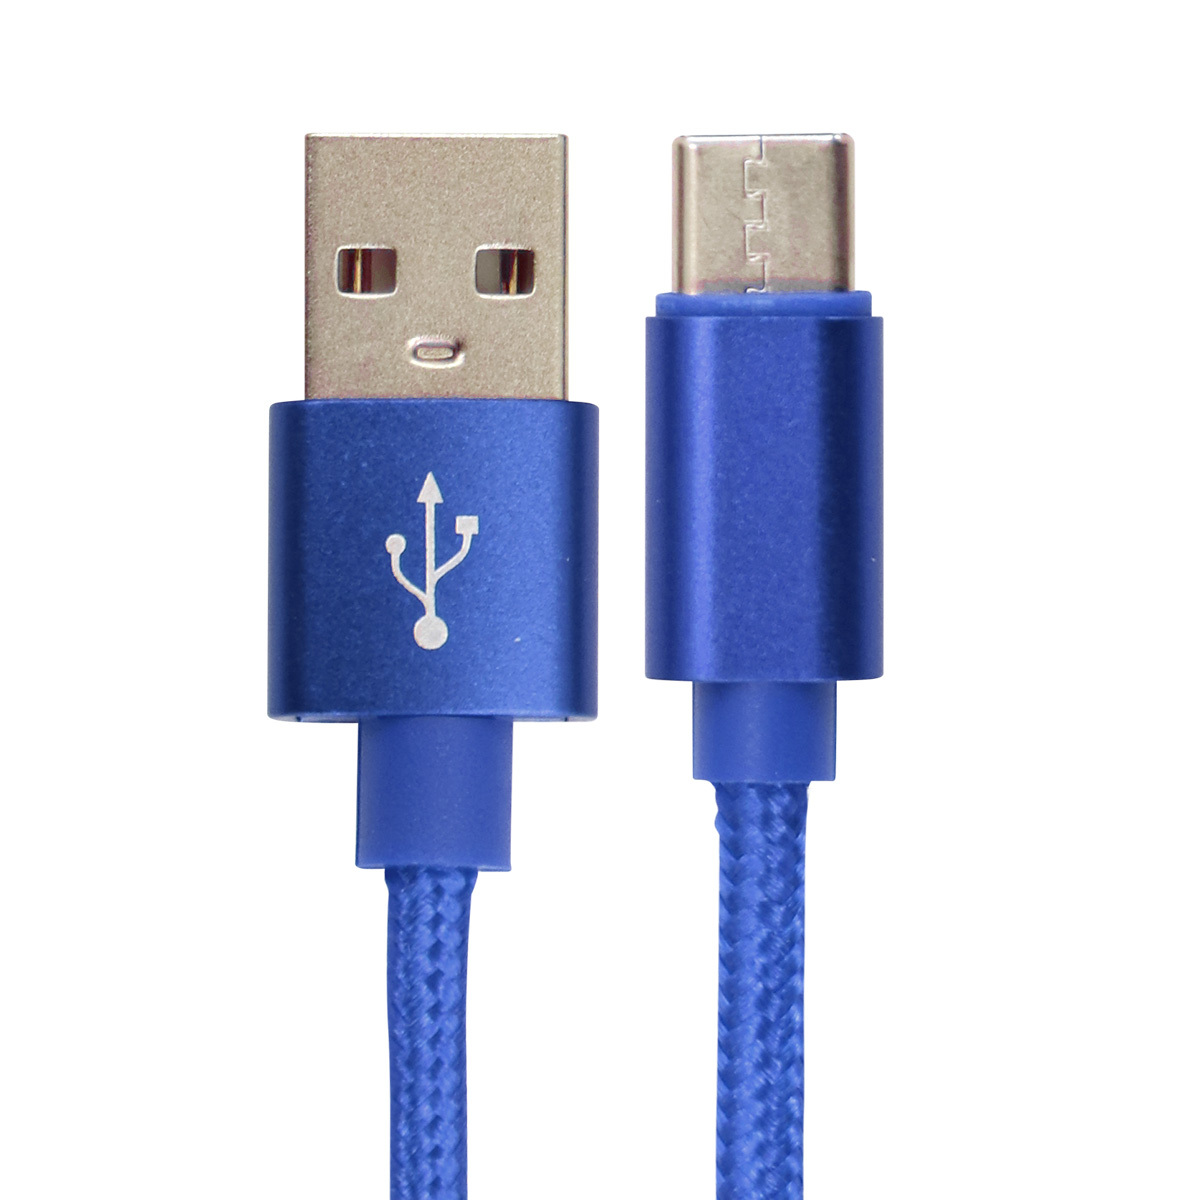 USB Type-C 充電ケーブル 長さ3m 急速充電 強化素材 データ転送 type-c Android USB ケーブル iPhone タイプC 充電 コード 充電器 追跡可能 TYPEC タイプシー